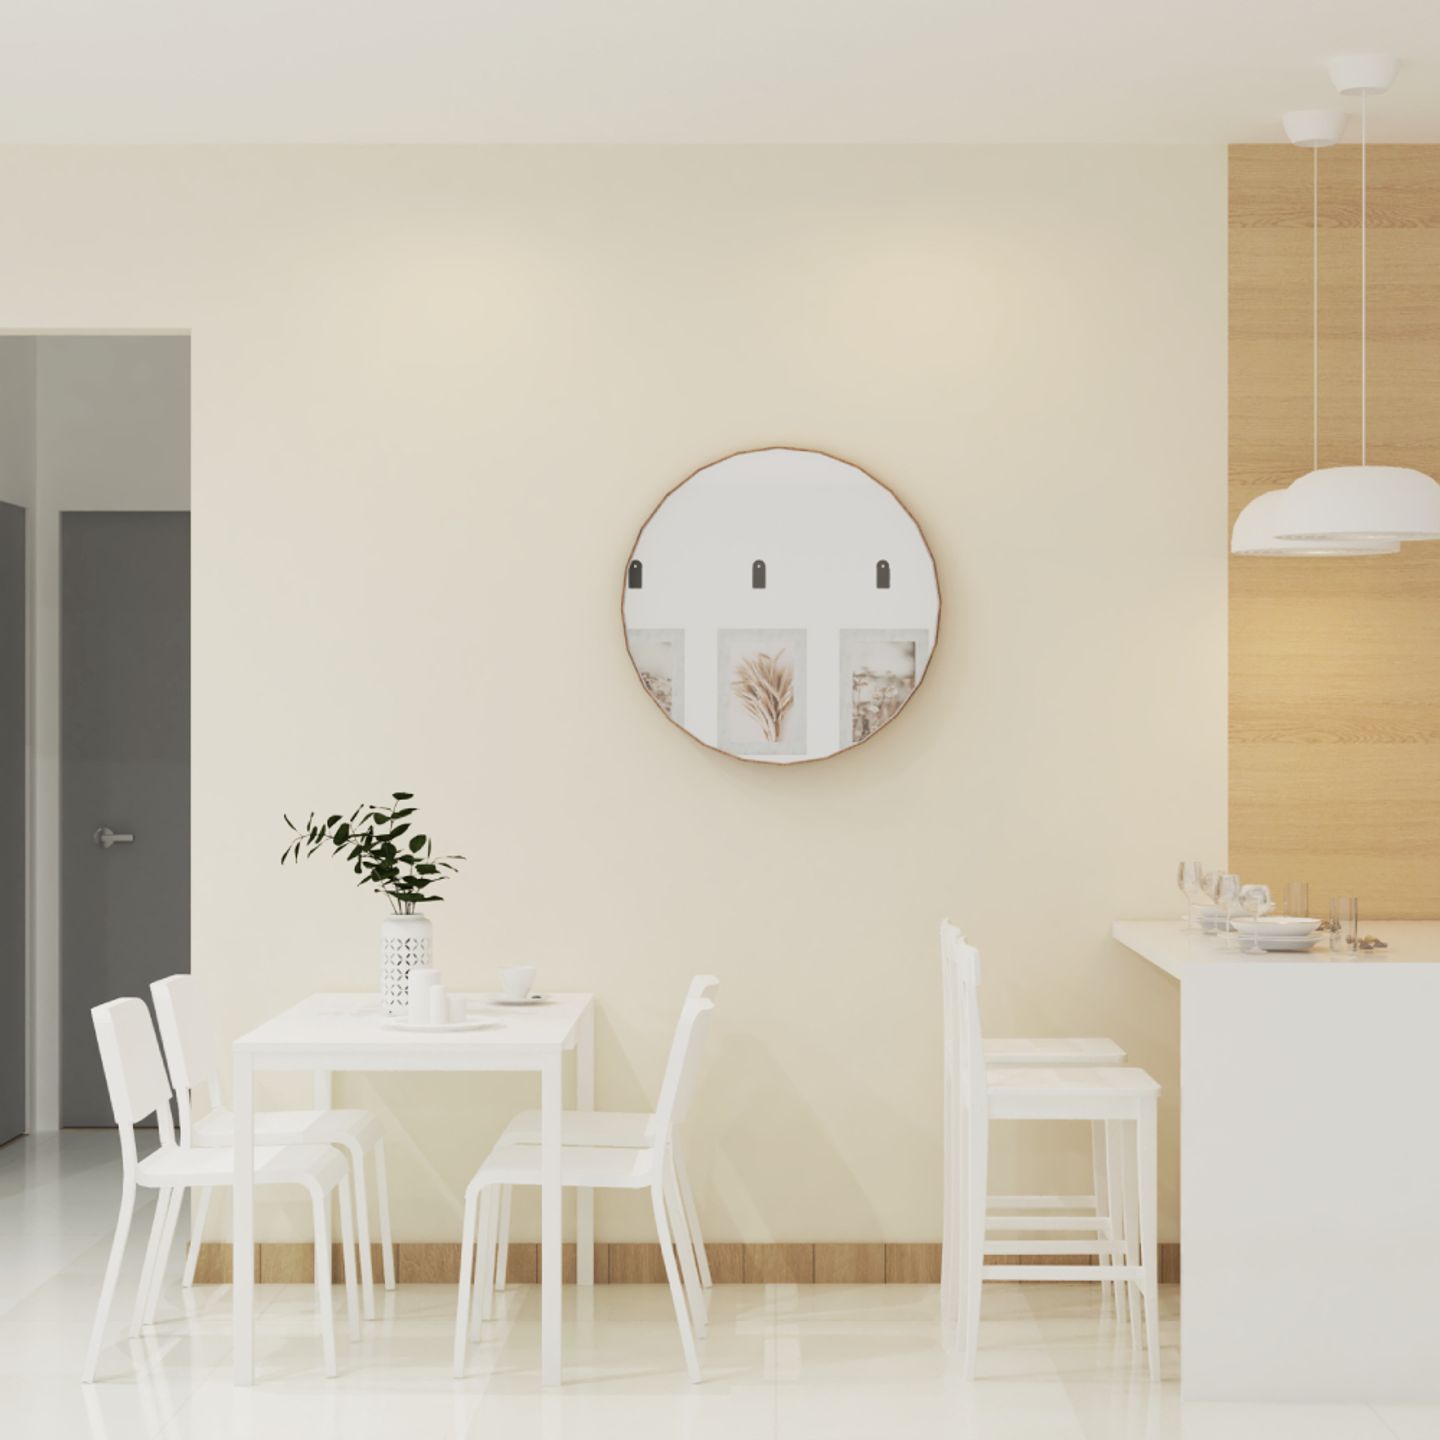 All-White Minimalistic Dining Room Design - Livspace